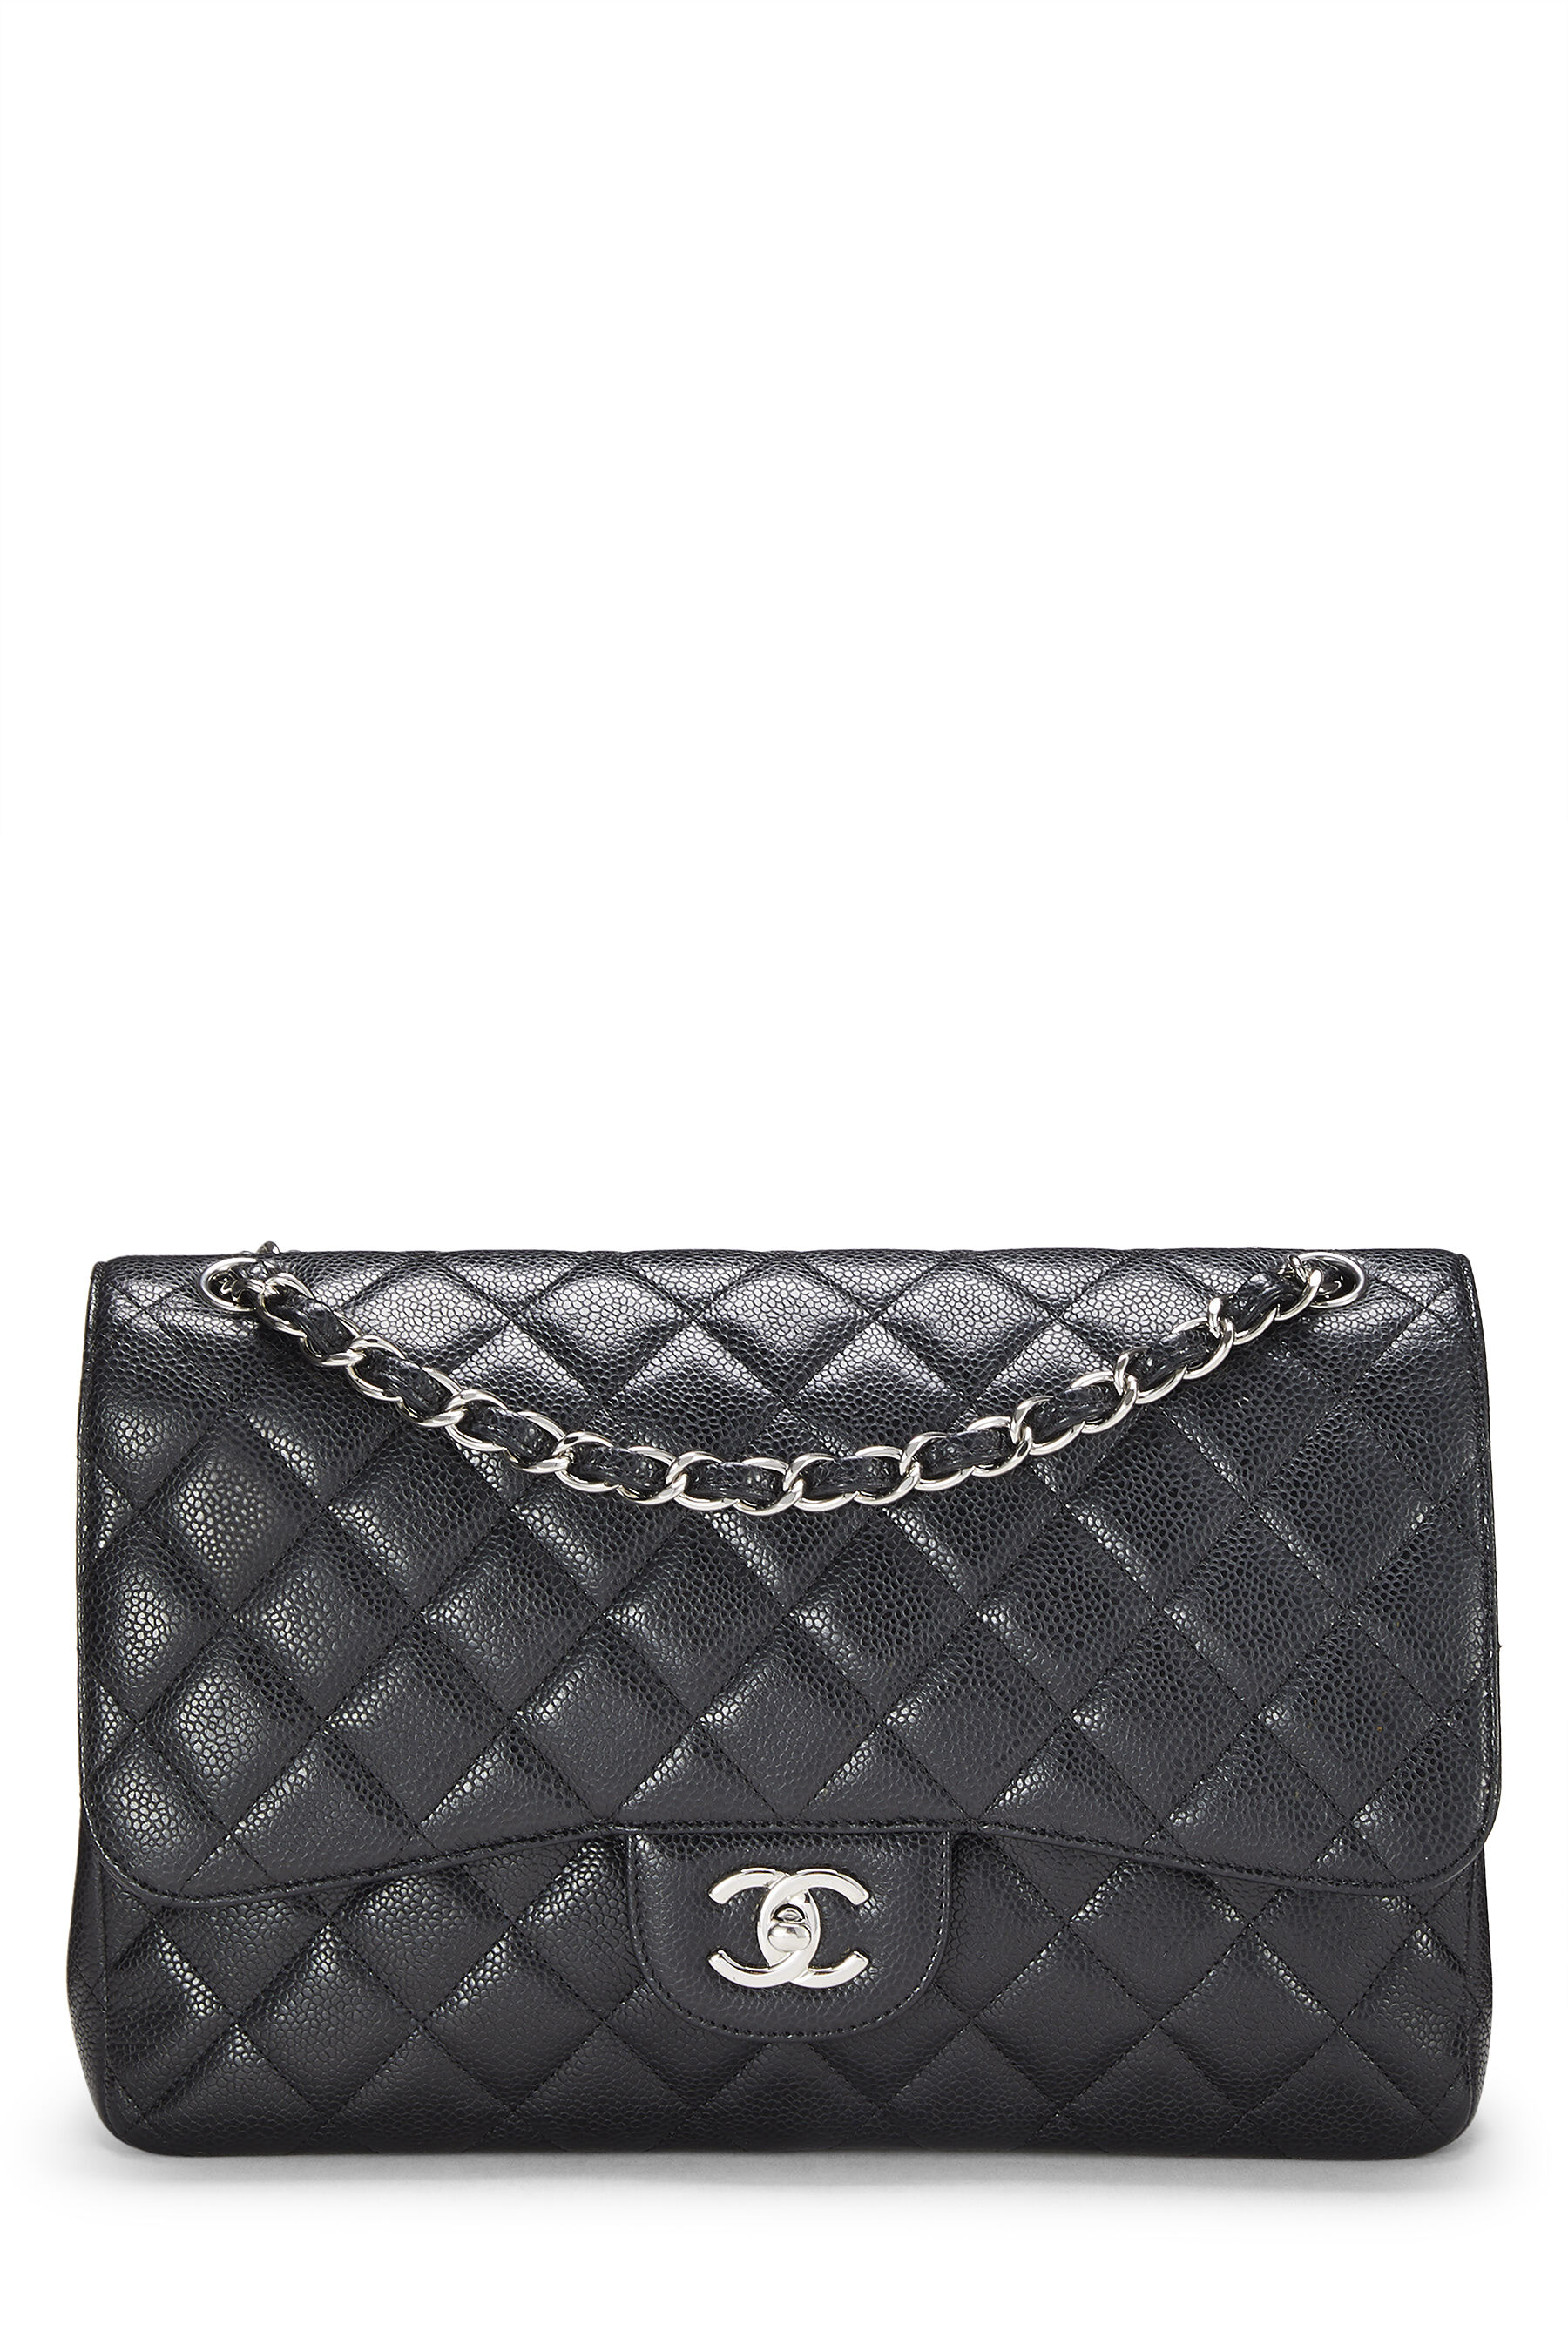 Chanel Black Caviar Medium Classic Flap Bag